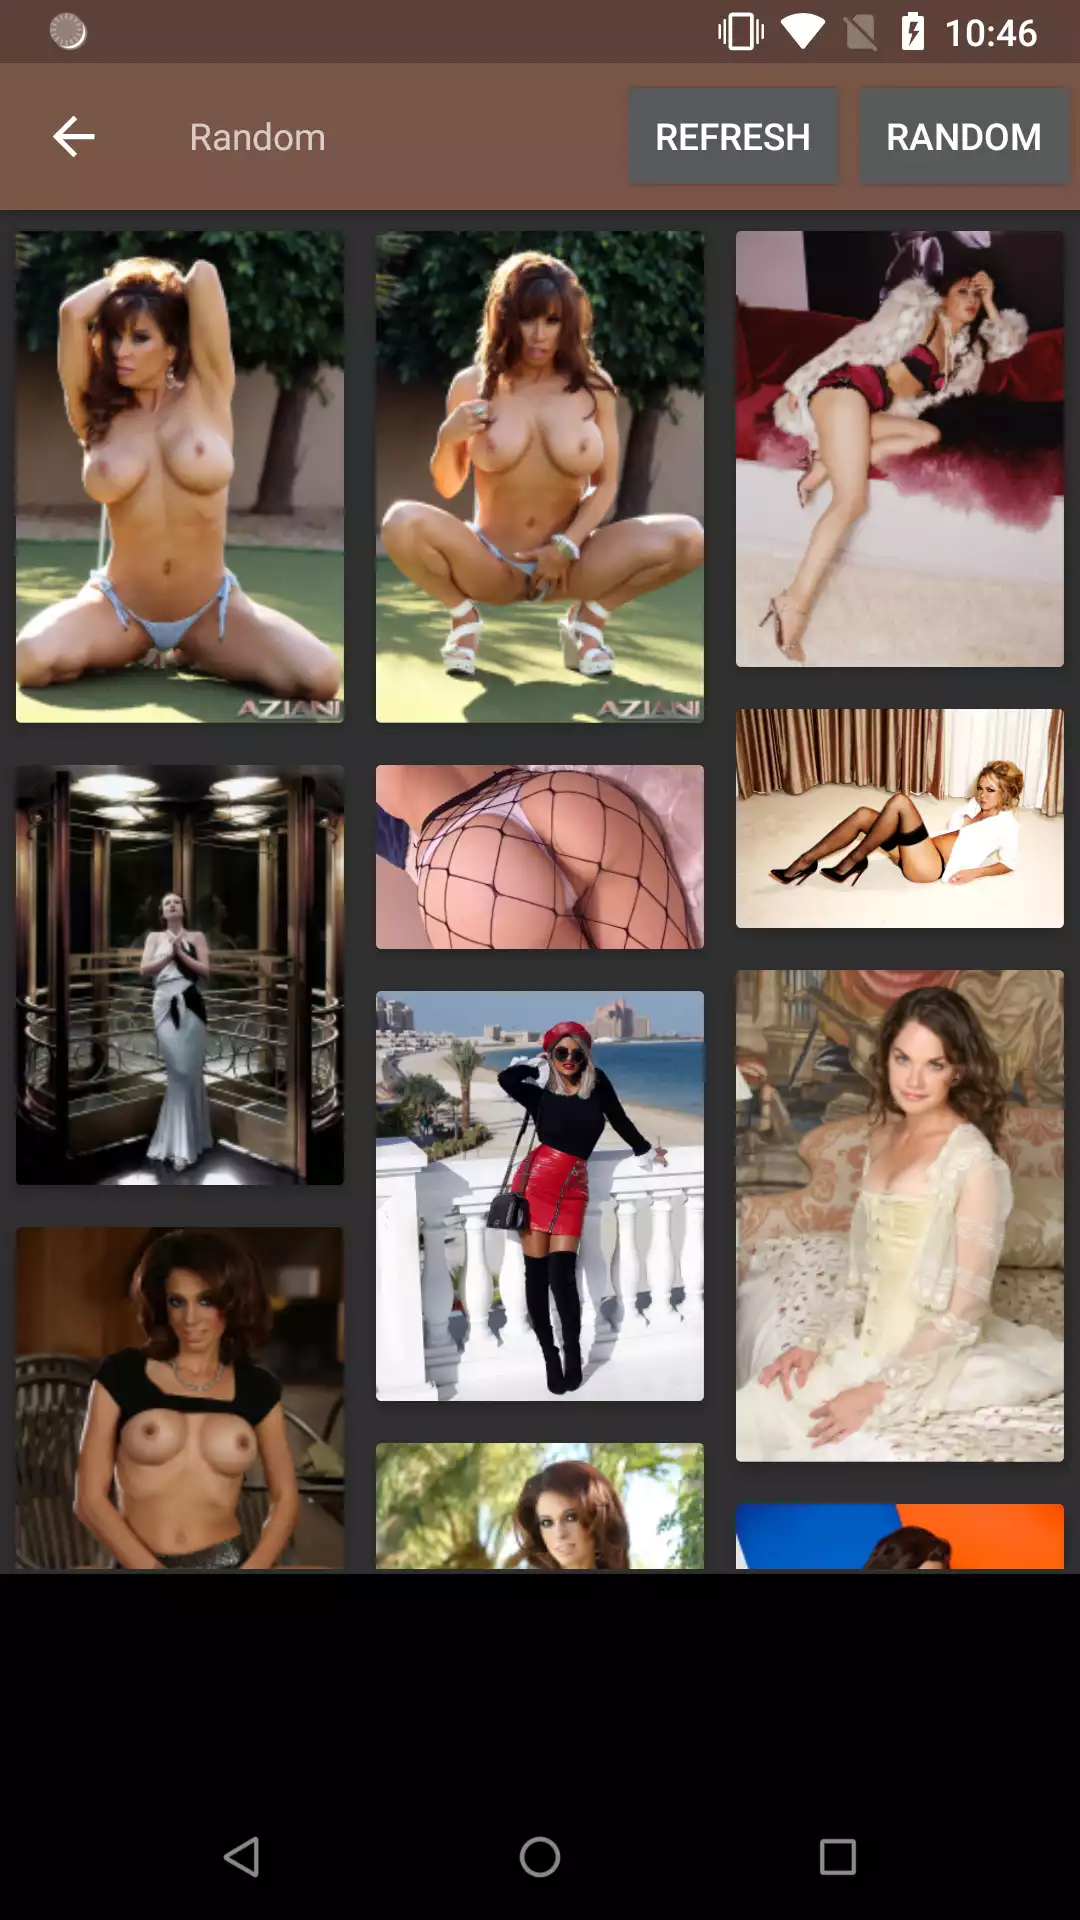 New Lingerie Photos pic,apk,photos,hentai,apps,girls,app,download,adult,lingerine,porn,anime,best,good,sexy,black,pron,henti,pics,aplikasi,photo,pictures,amateurs